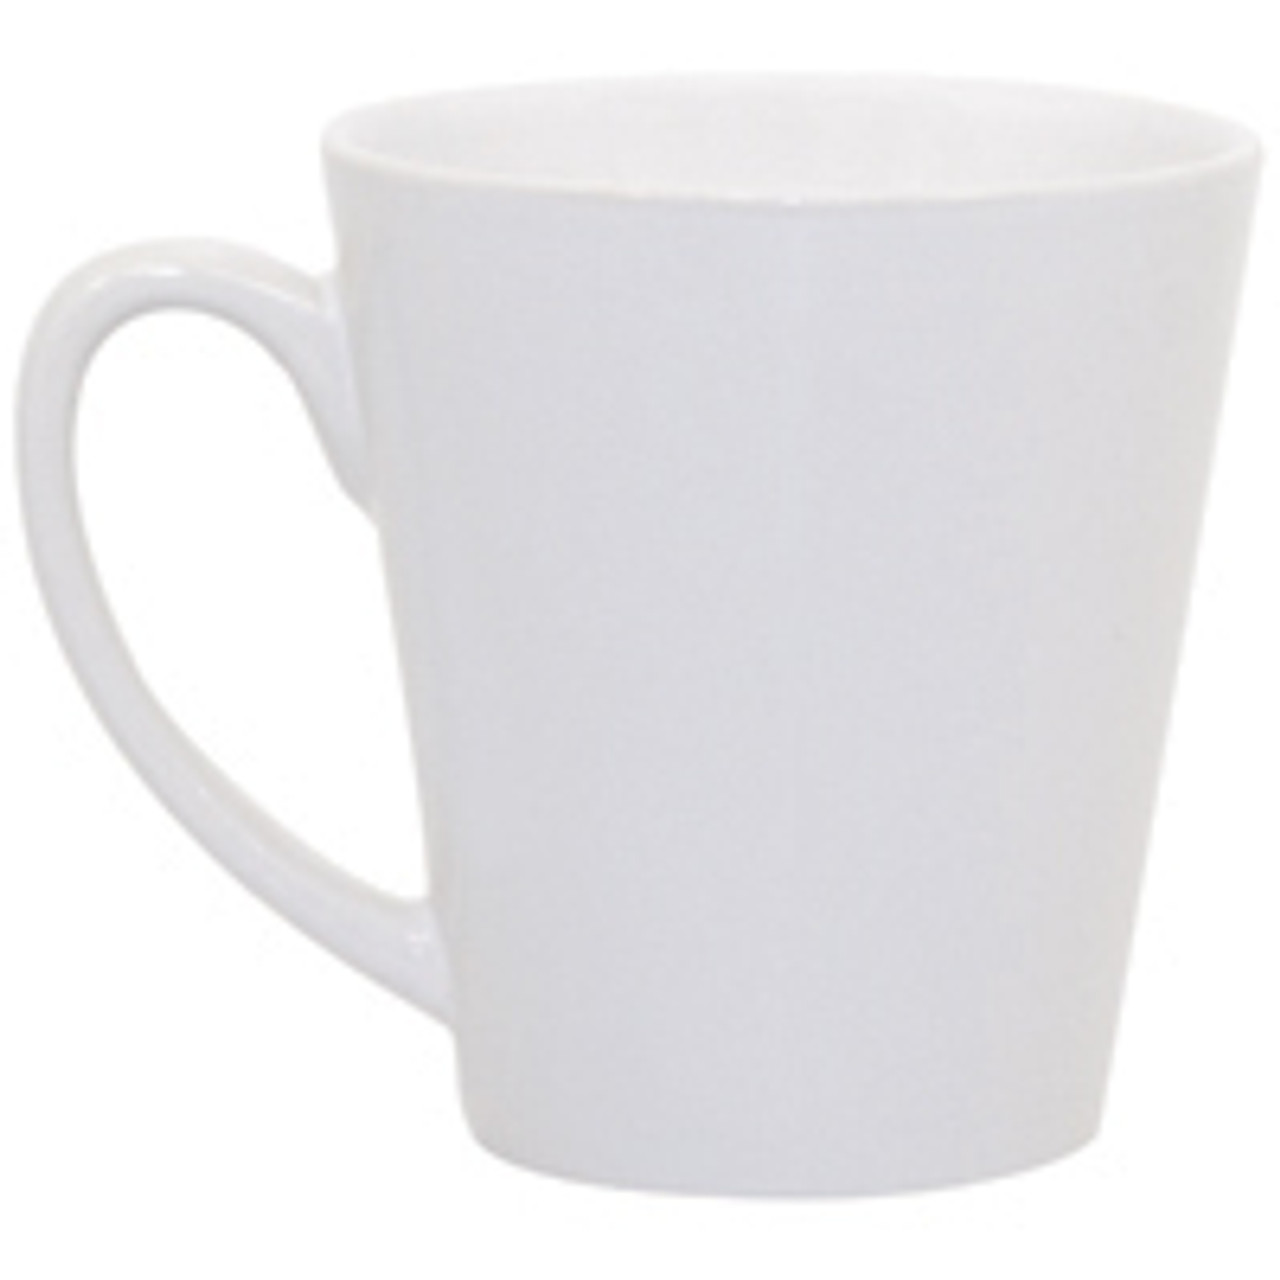 Sublimation Blank Coffee Mug 12oz Heat Transfer Press Coffee Mug Blank  Microwave Safe Dishwasher Safe Customize Your Own Mugs 